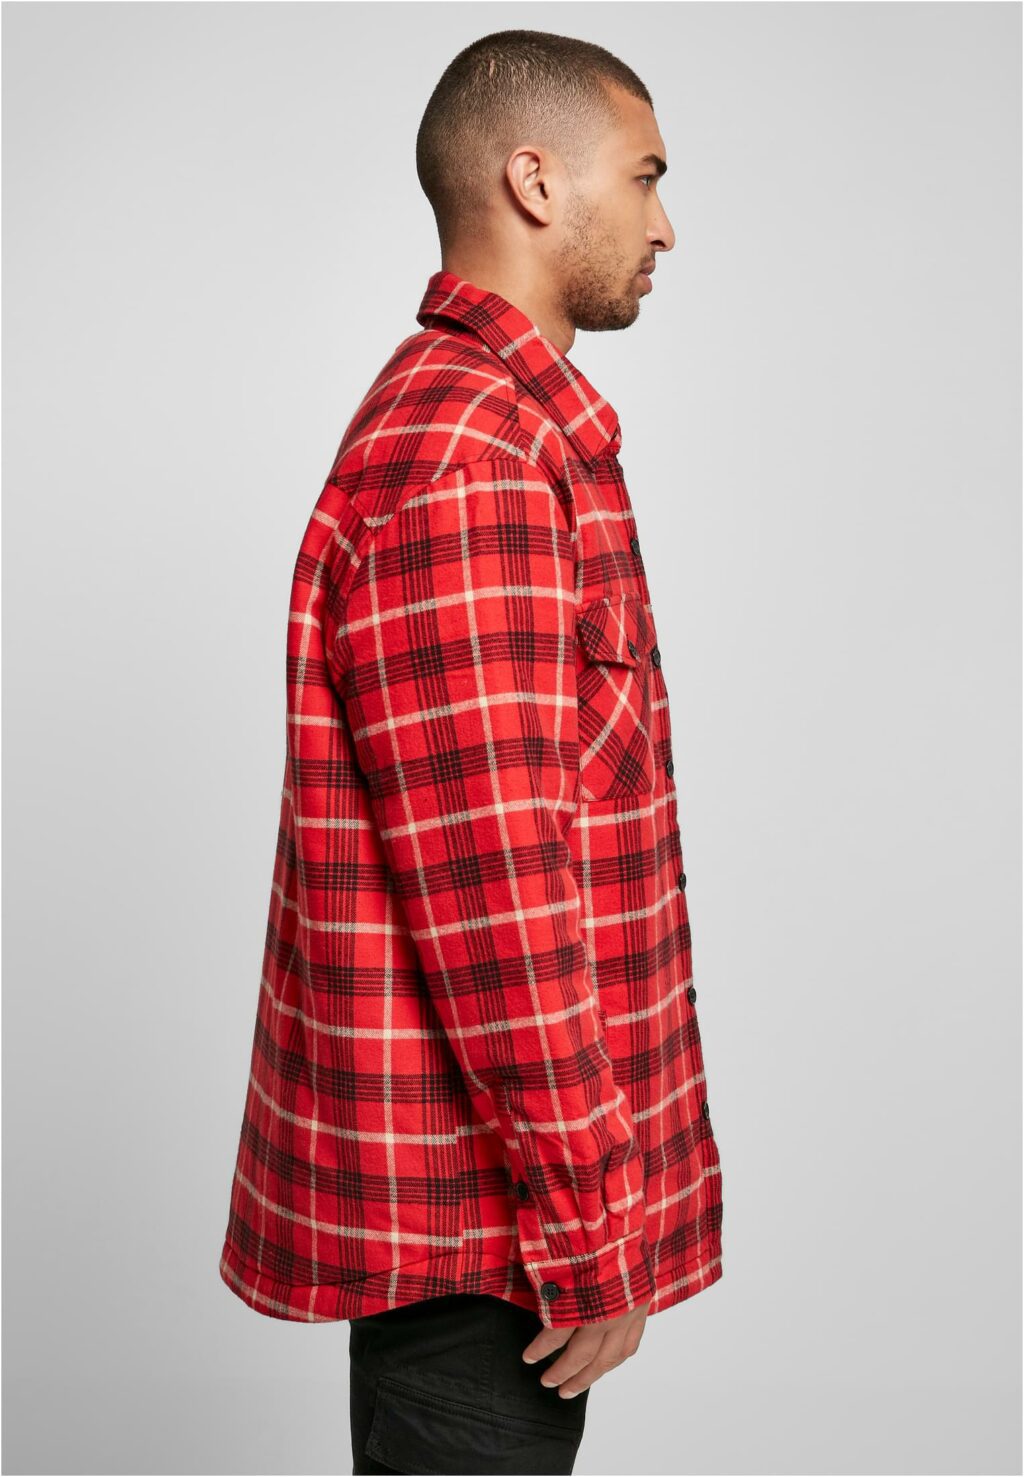 Urban Classics Plaid Quilted Shirt Jacket red/black TB3829